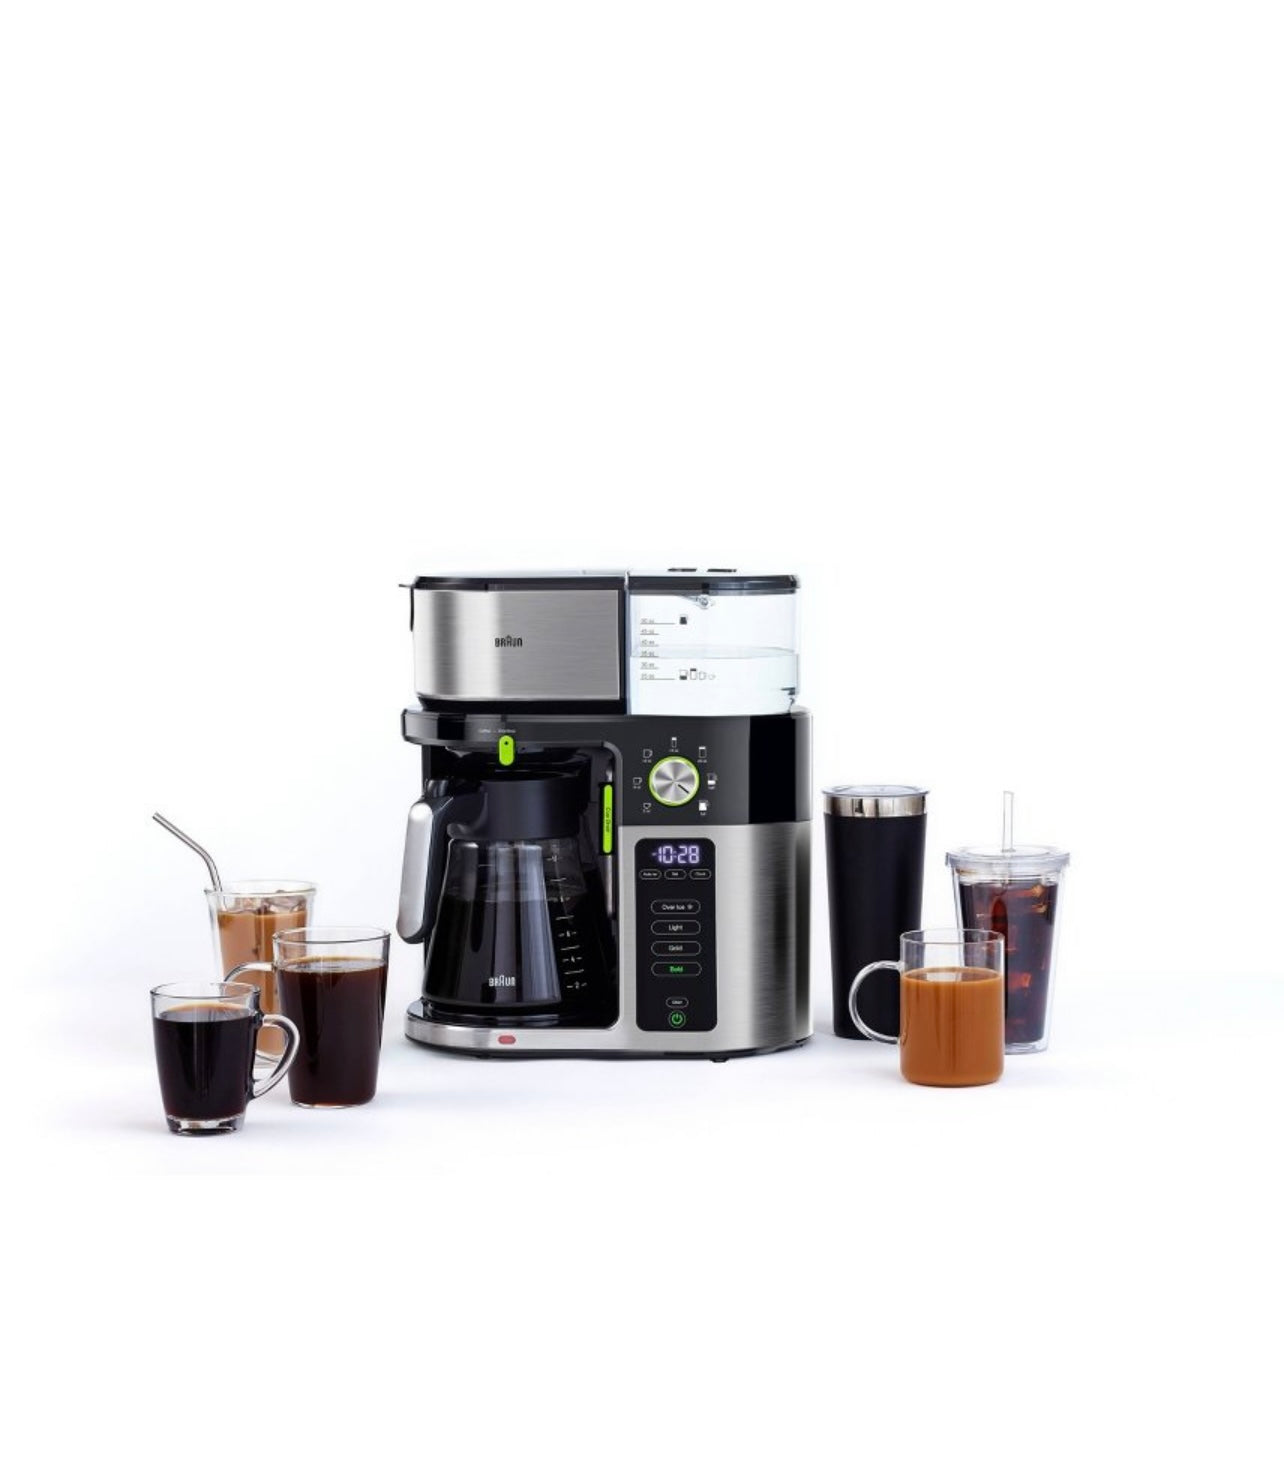 Braun MultiServe Drip Coffee Maker - KF9050